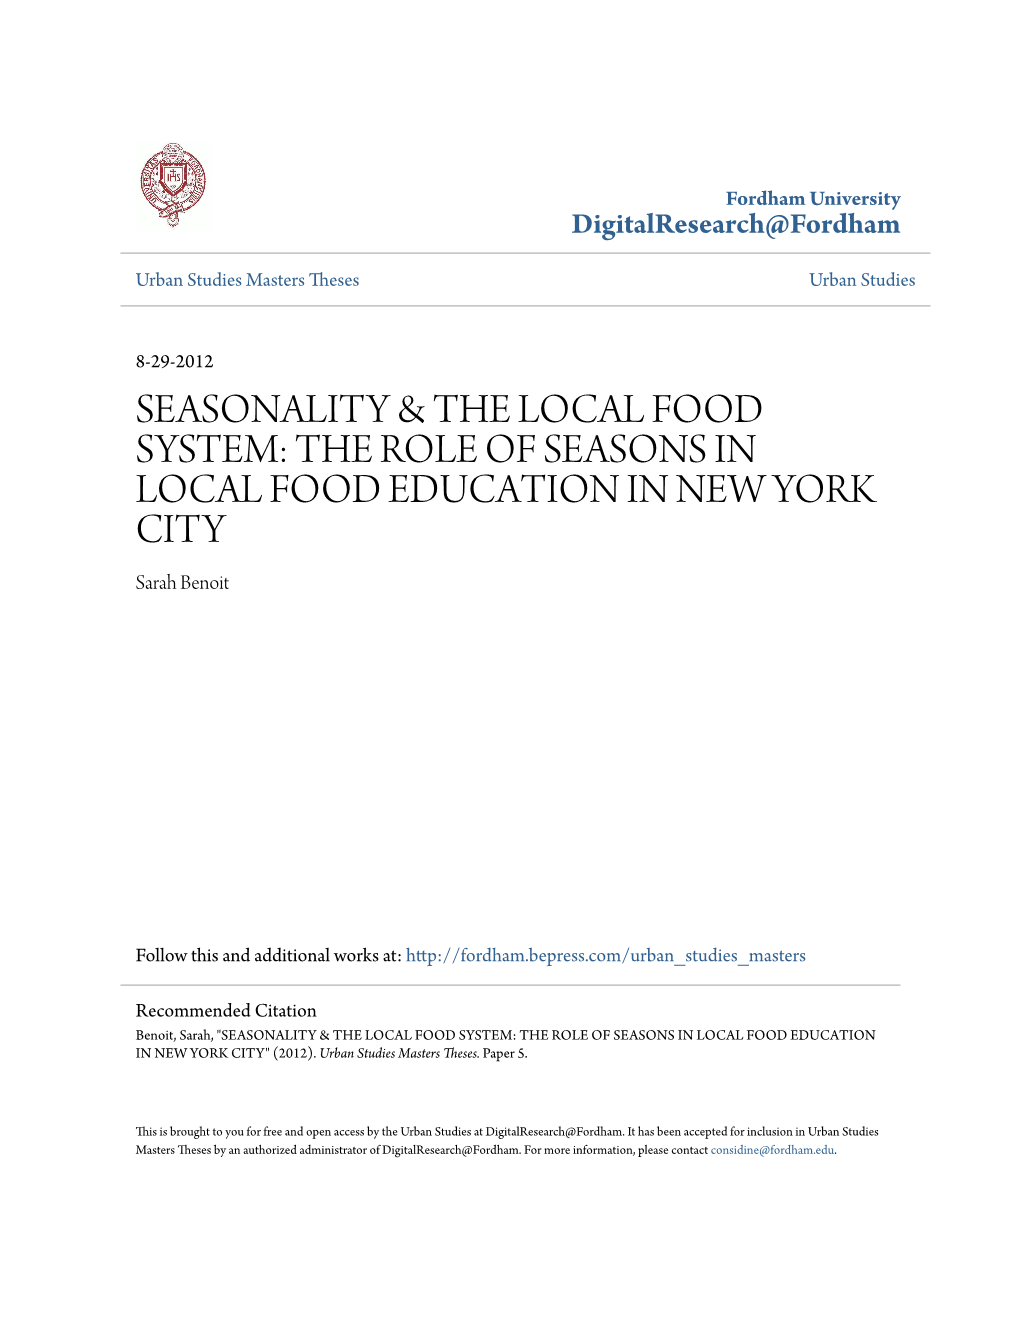 Seasonality & the Local Food System